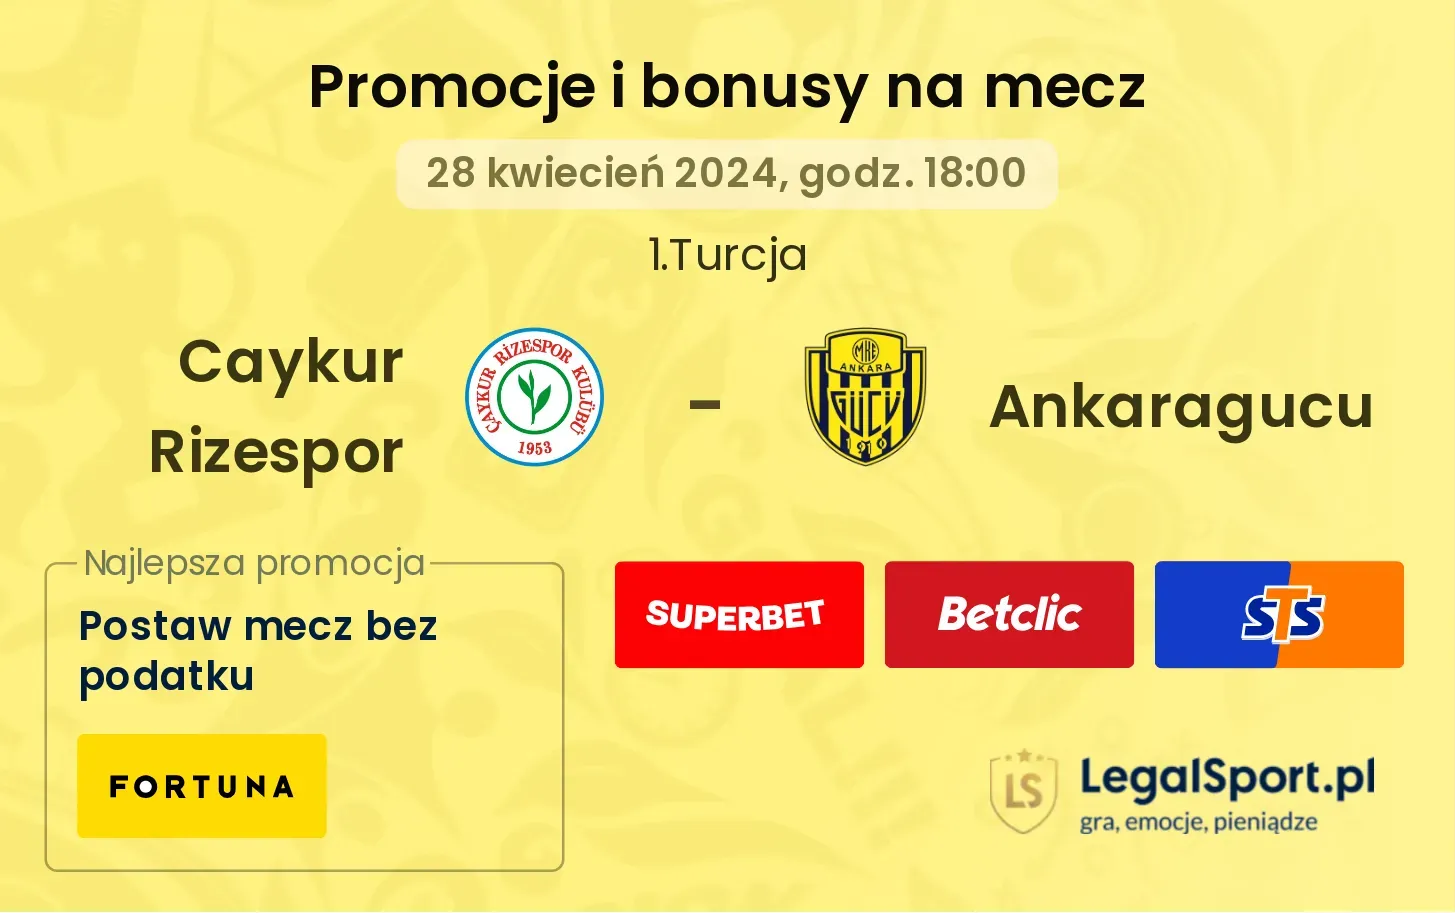 Caykur Rizespor - Ankaragucu promocje bonusy na mecz